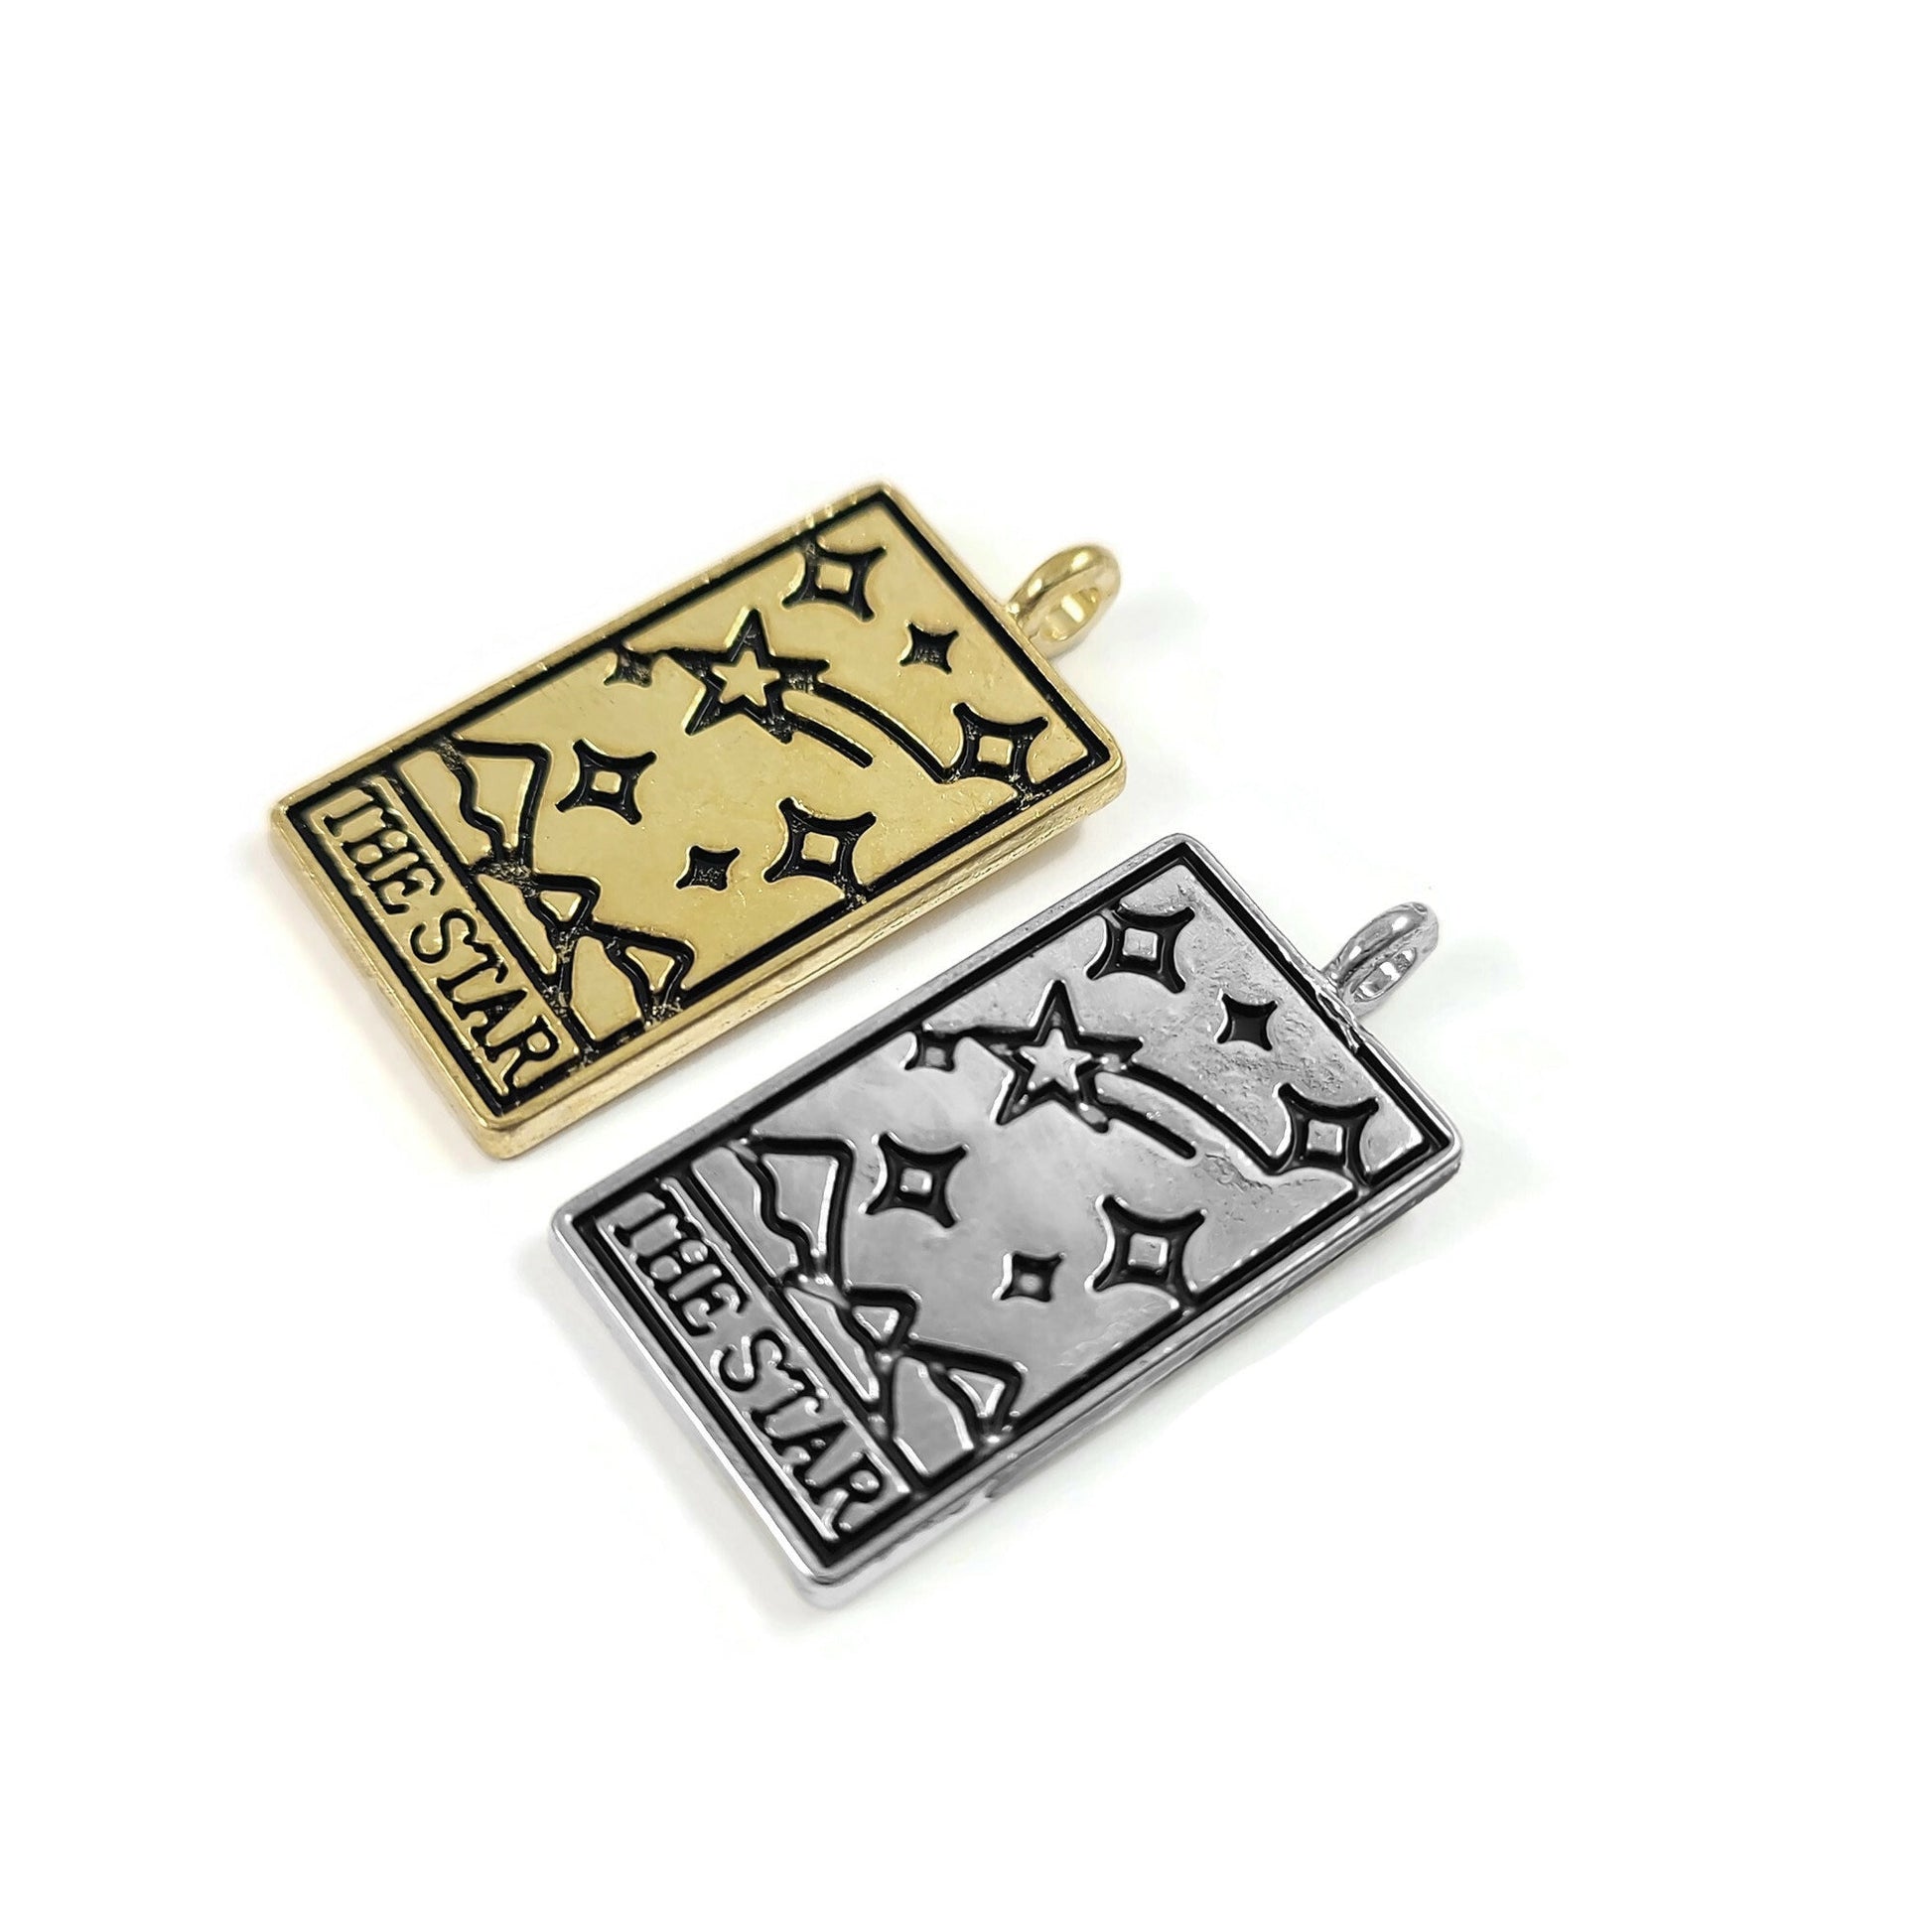 Tarot card charm, Gold, Silver, Necklace making pendant, Sun, Moon, Star, World, Fortune